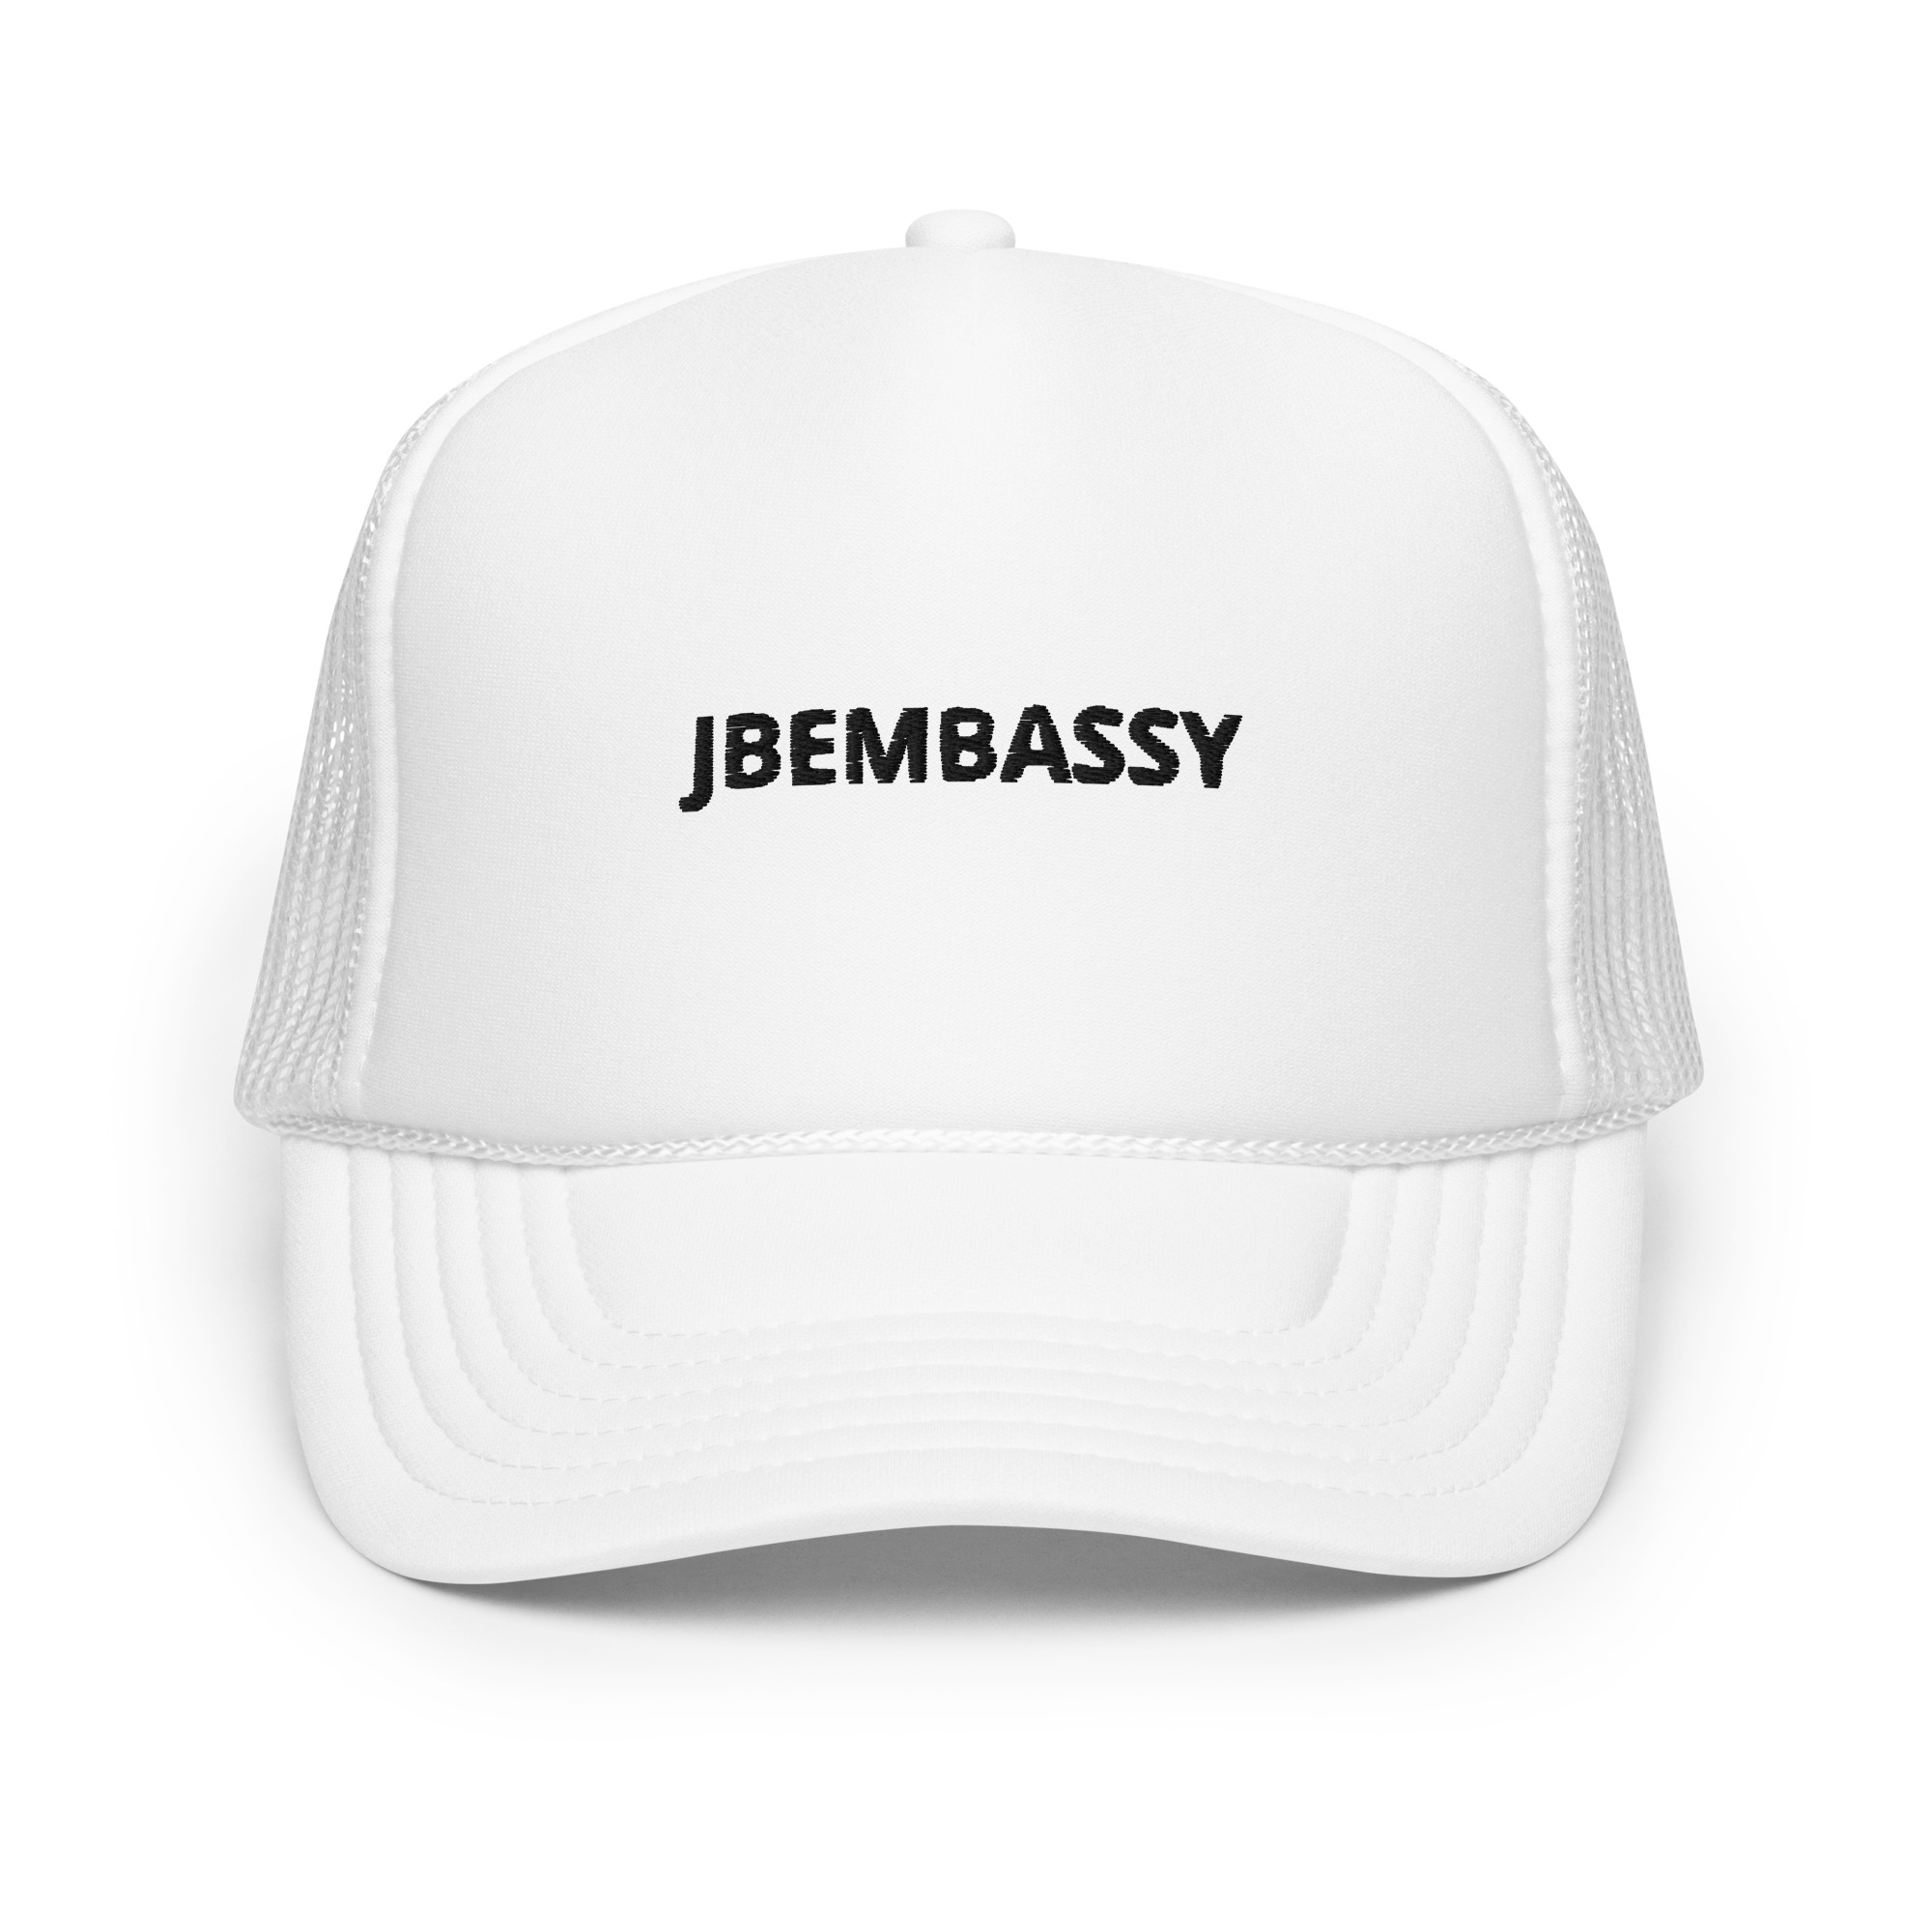 jbembassy